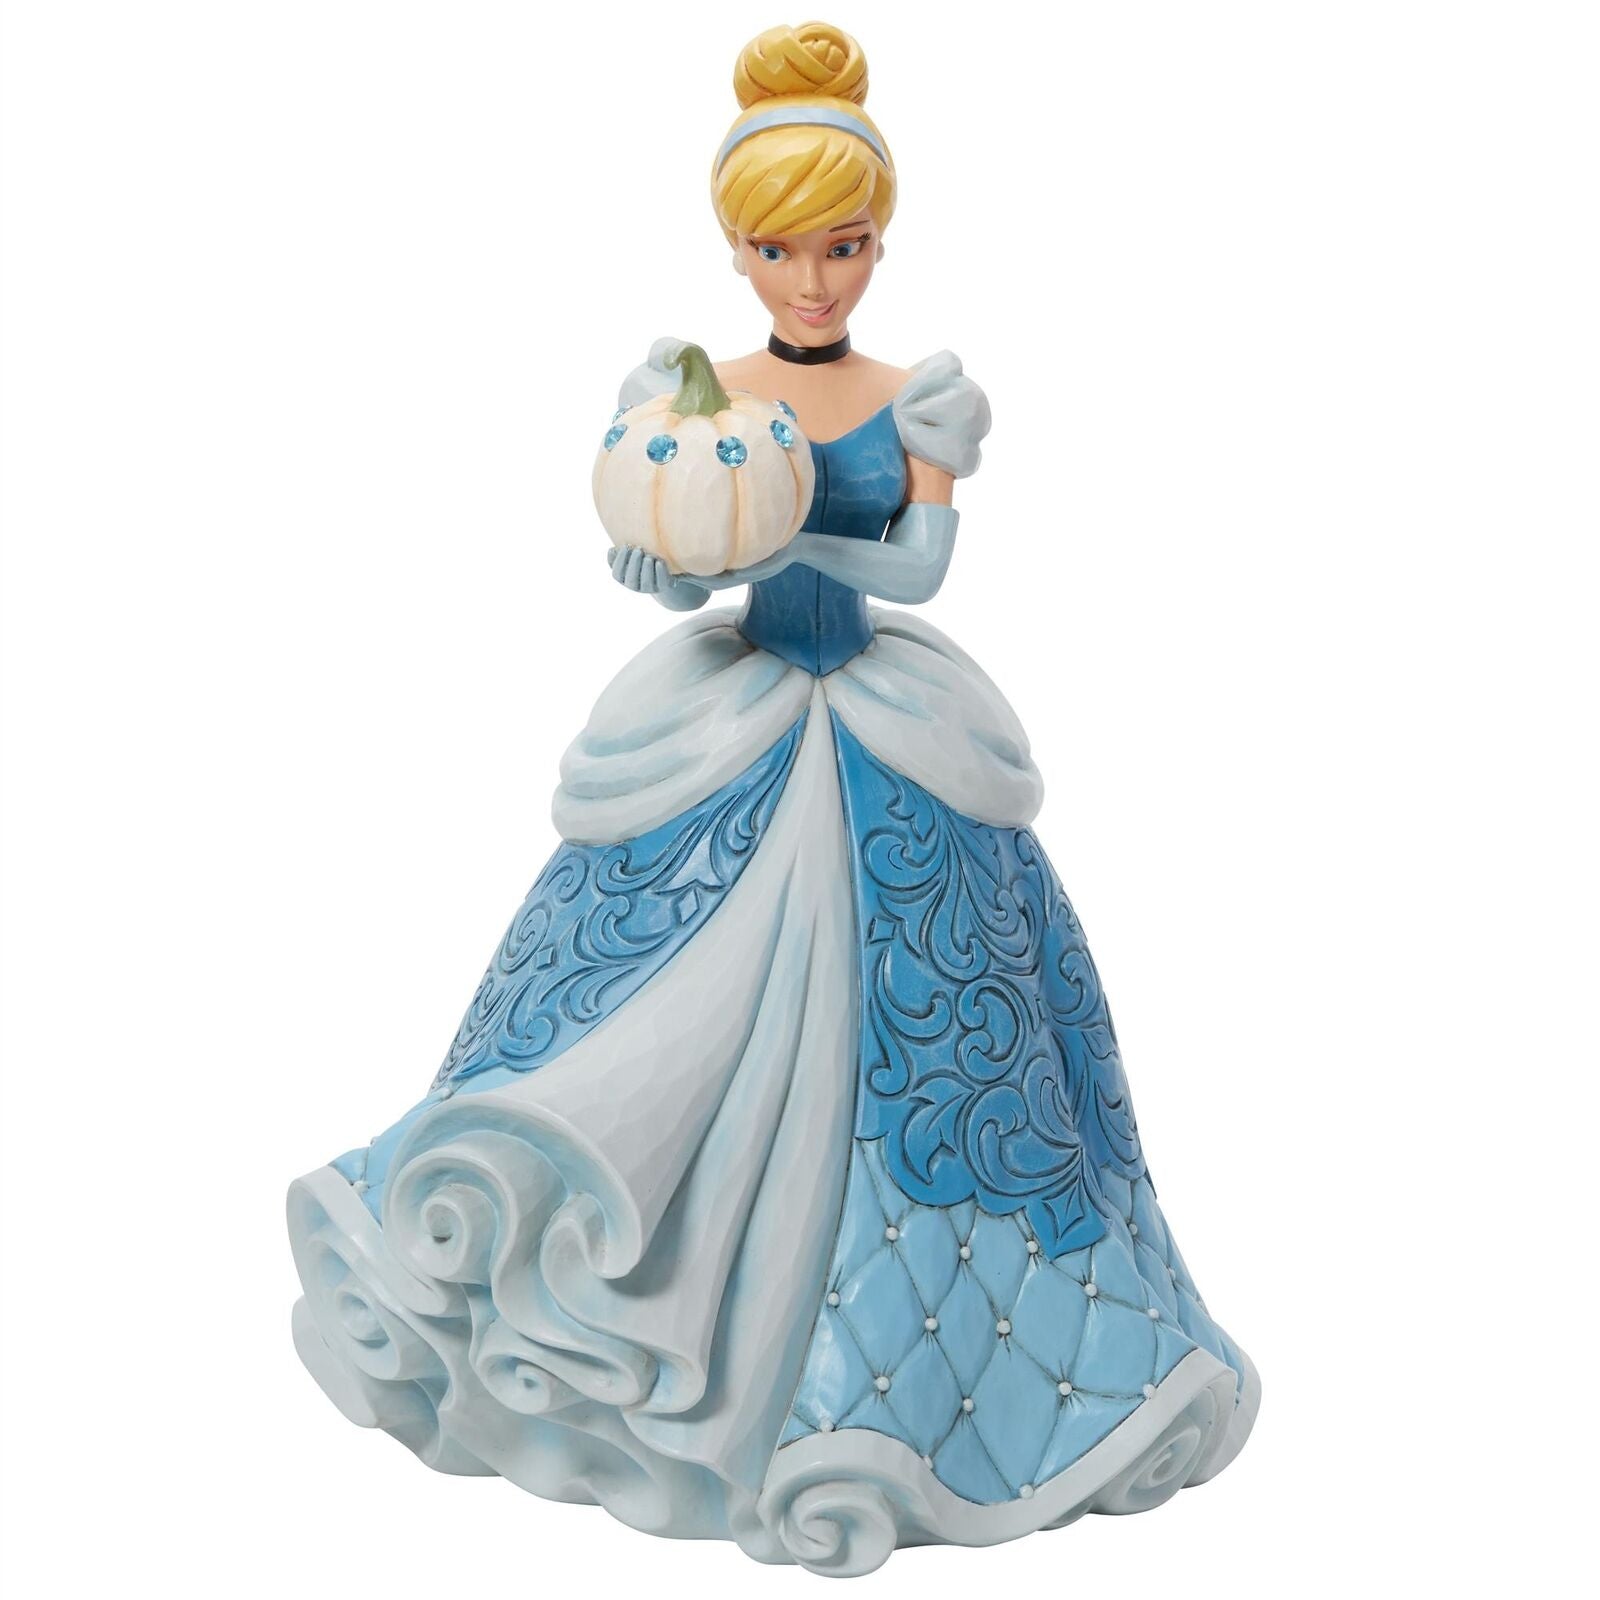 Cinderella Deluxe Figurine